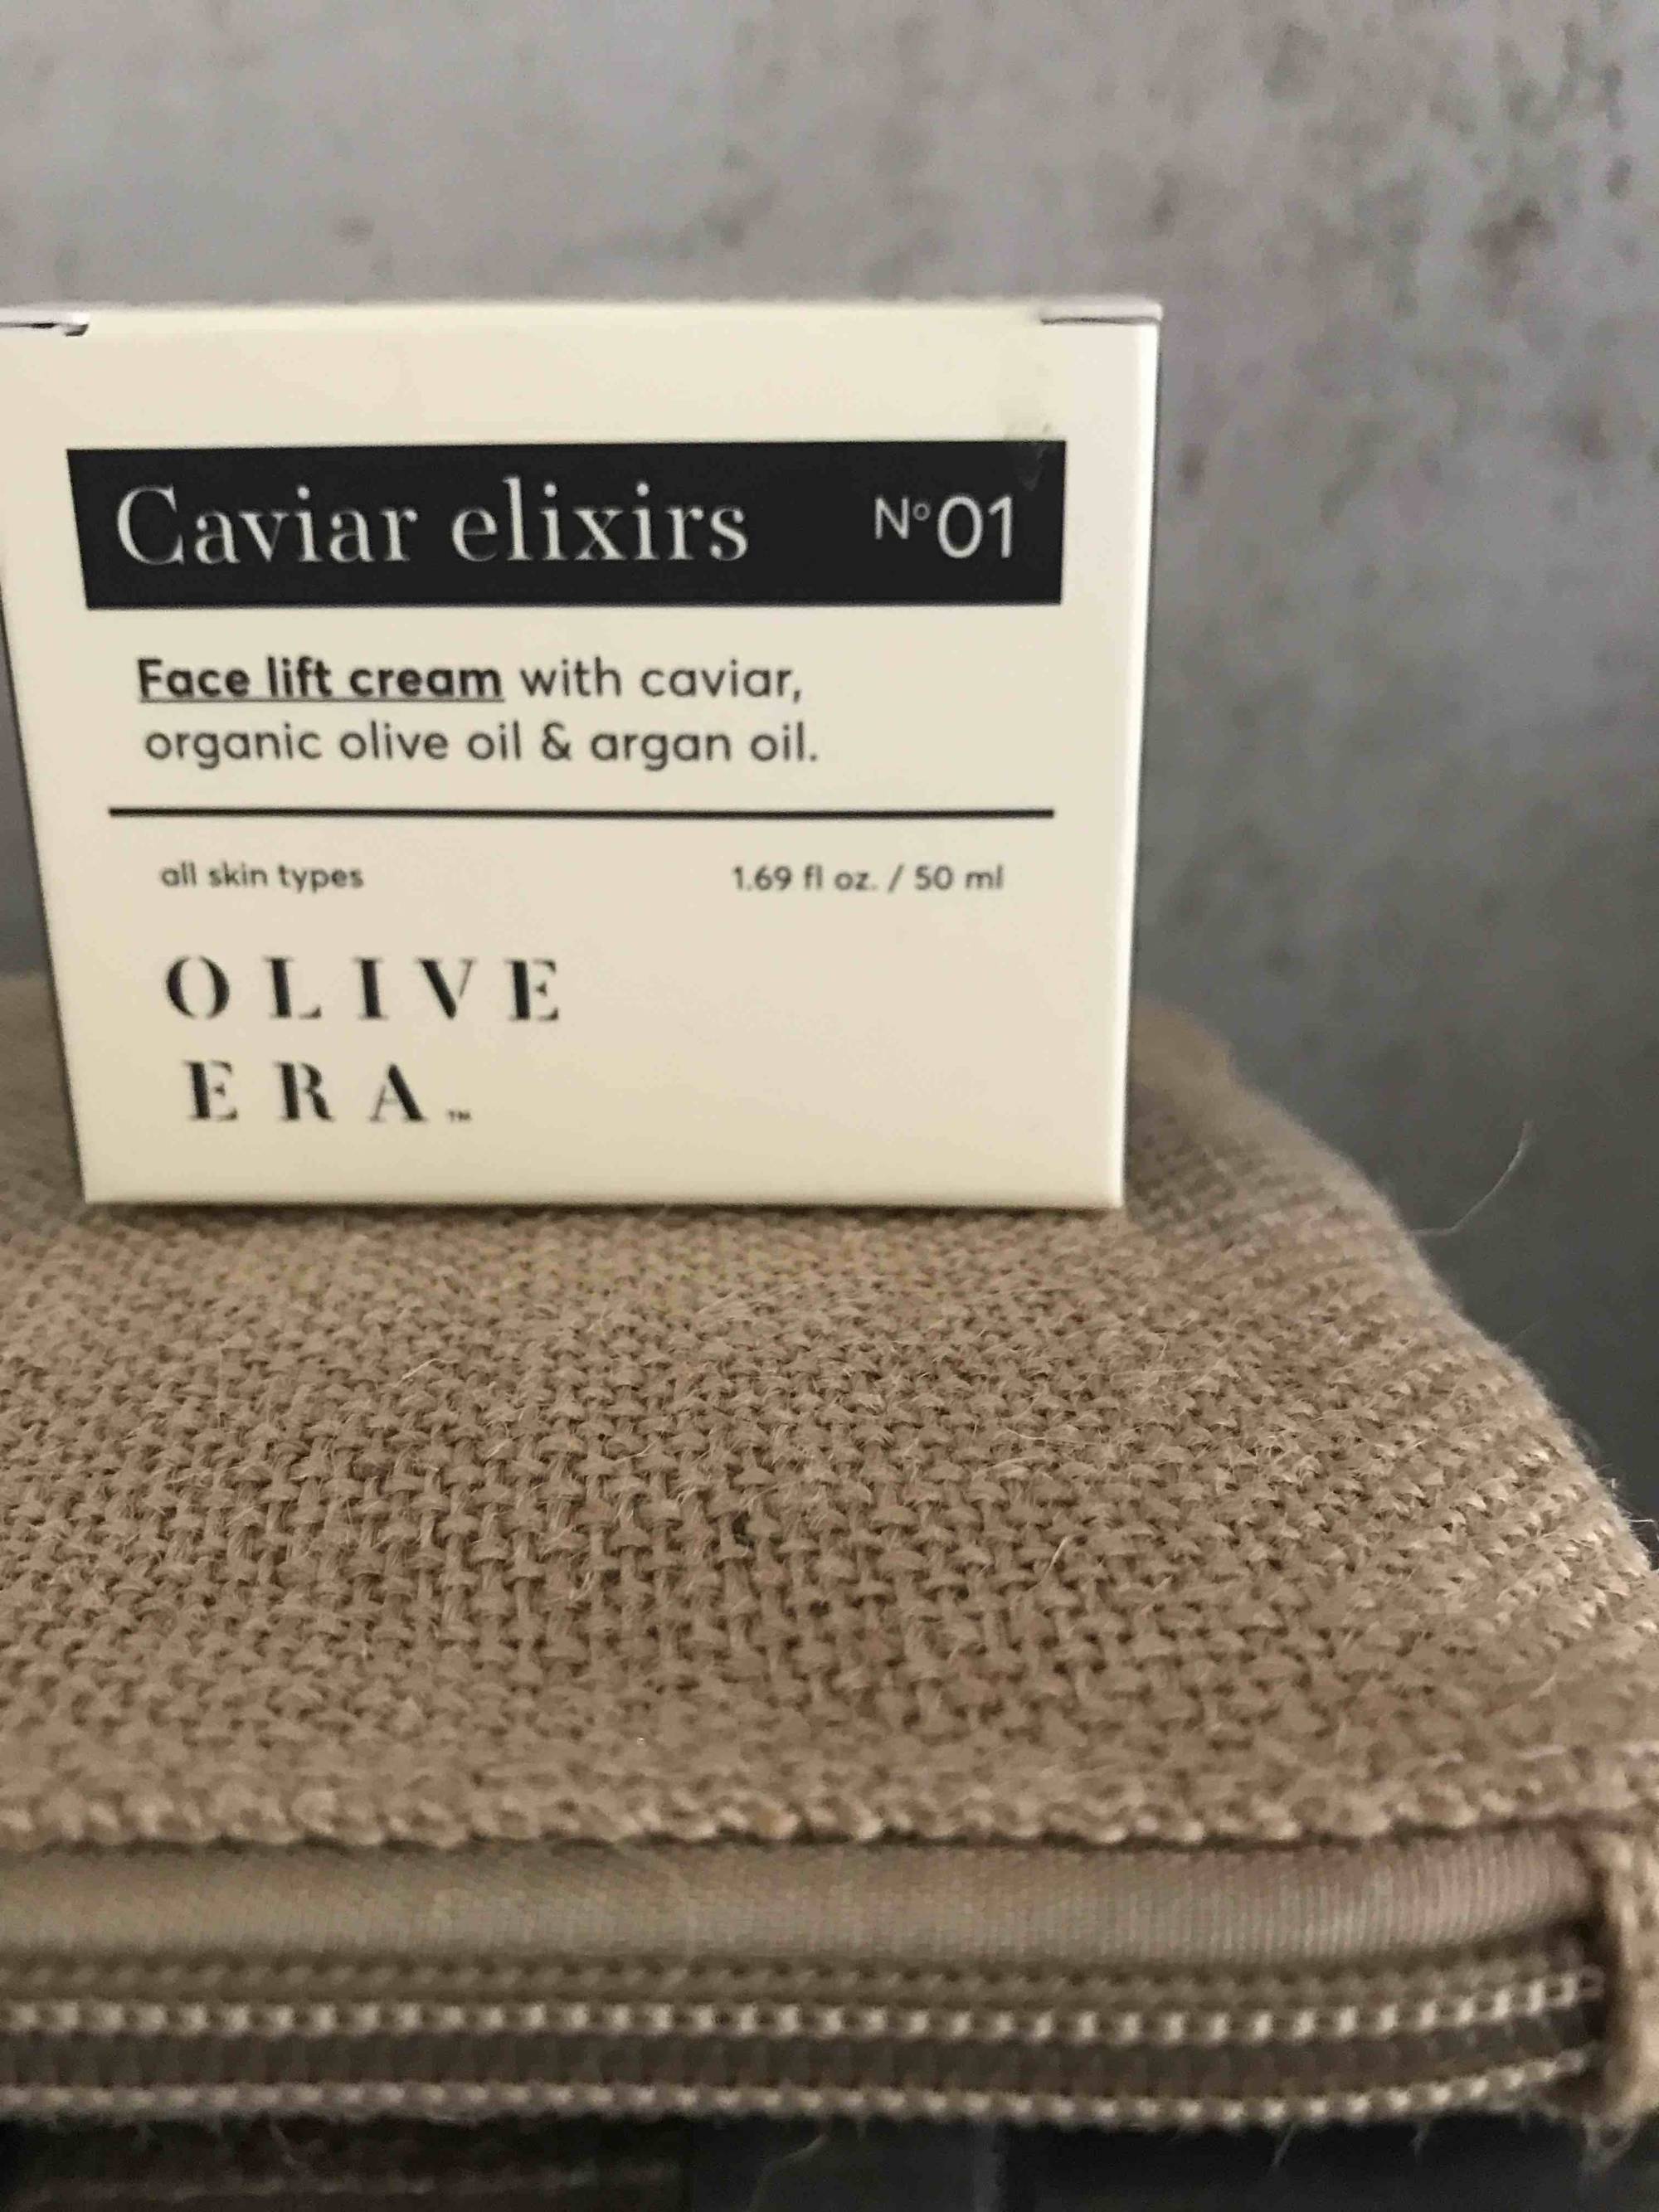 OLIVE ERA - Caviar elixirs n° 01 - Face lift cream